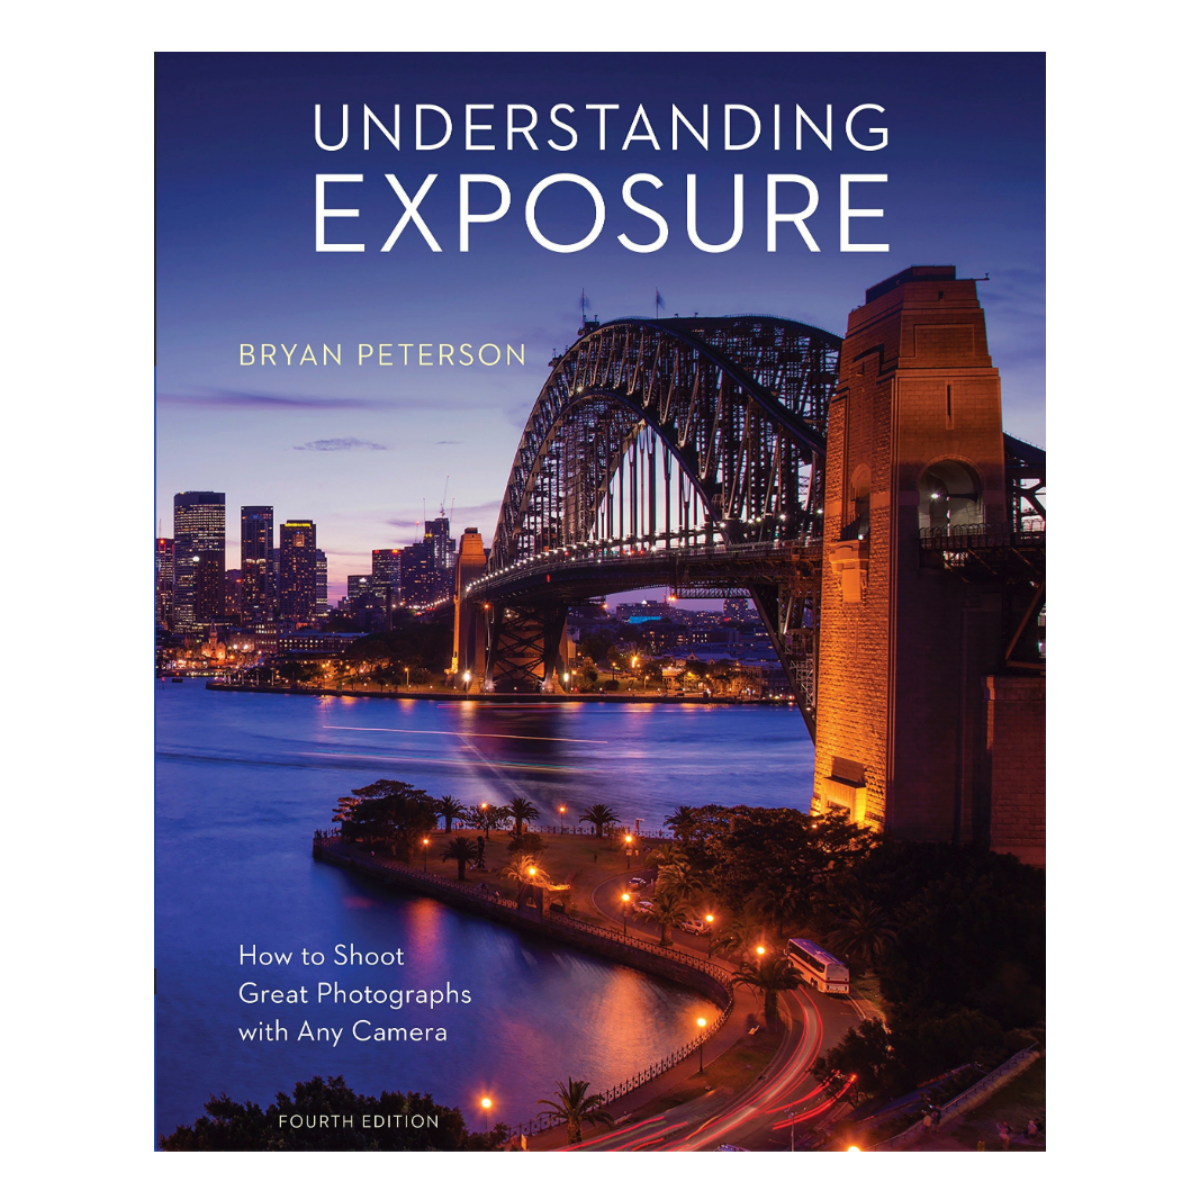 The book Understanding Exposure by Bryan Peterson